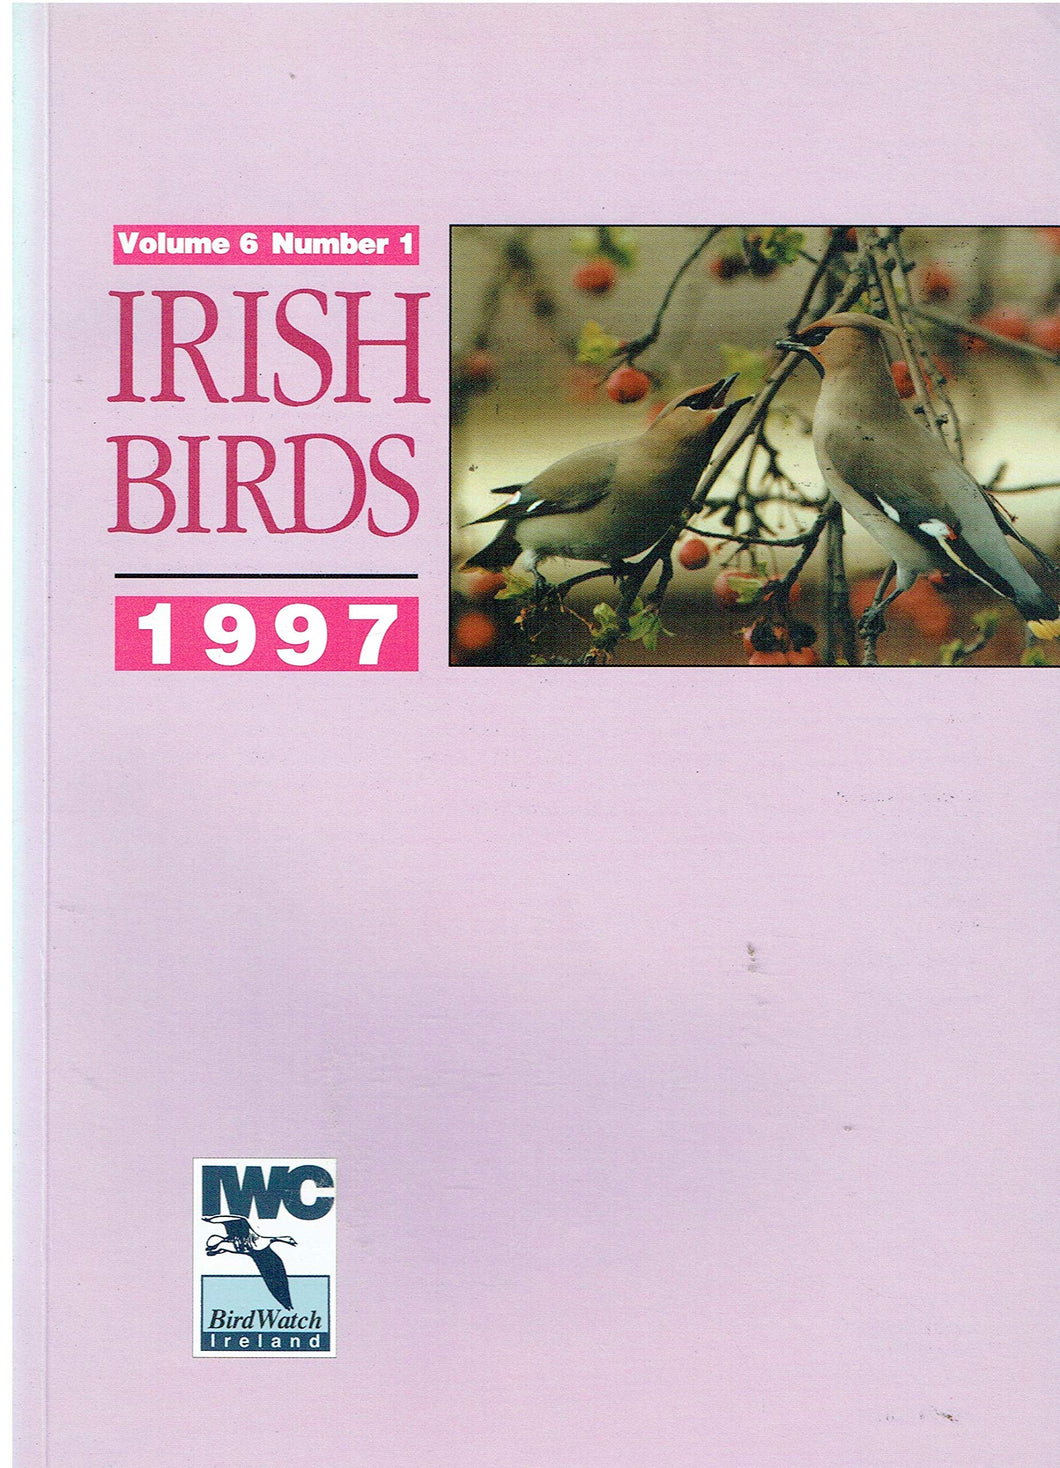 Irish Birds, 1997 - Volume 6 Number 1